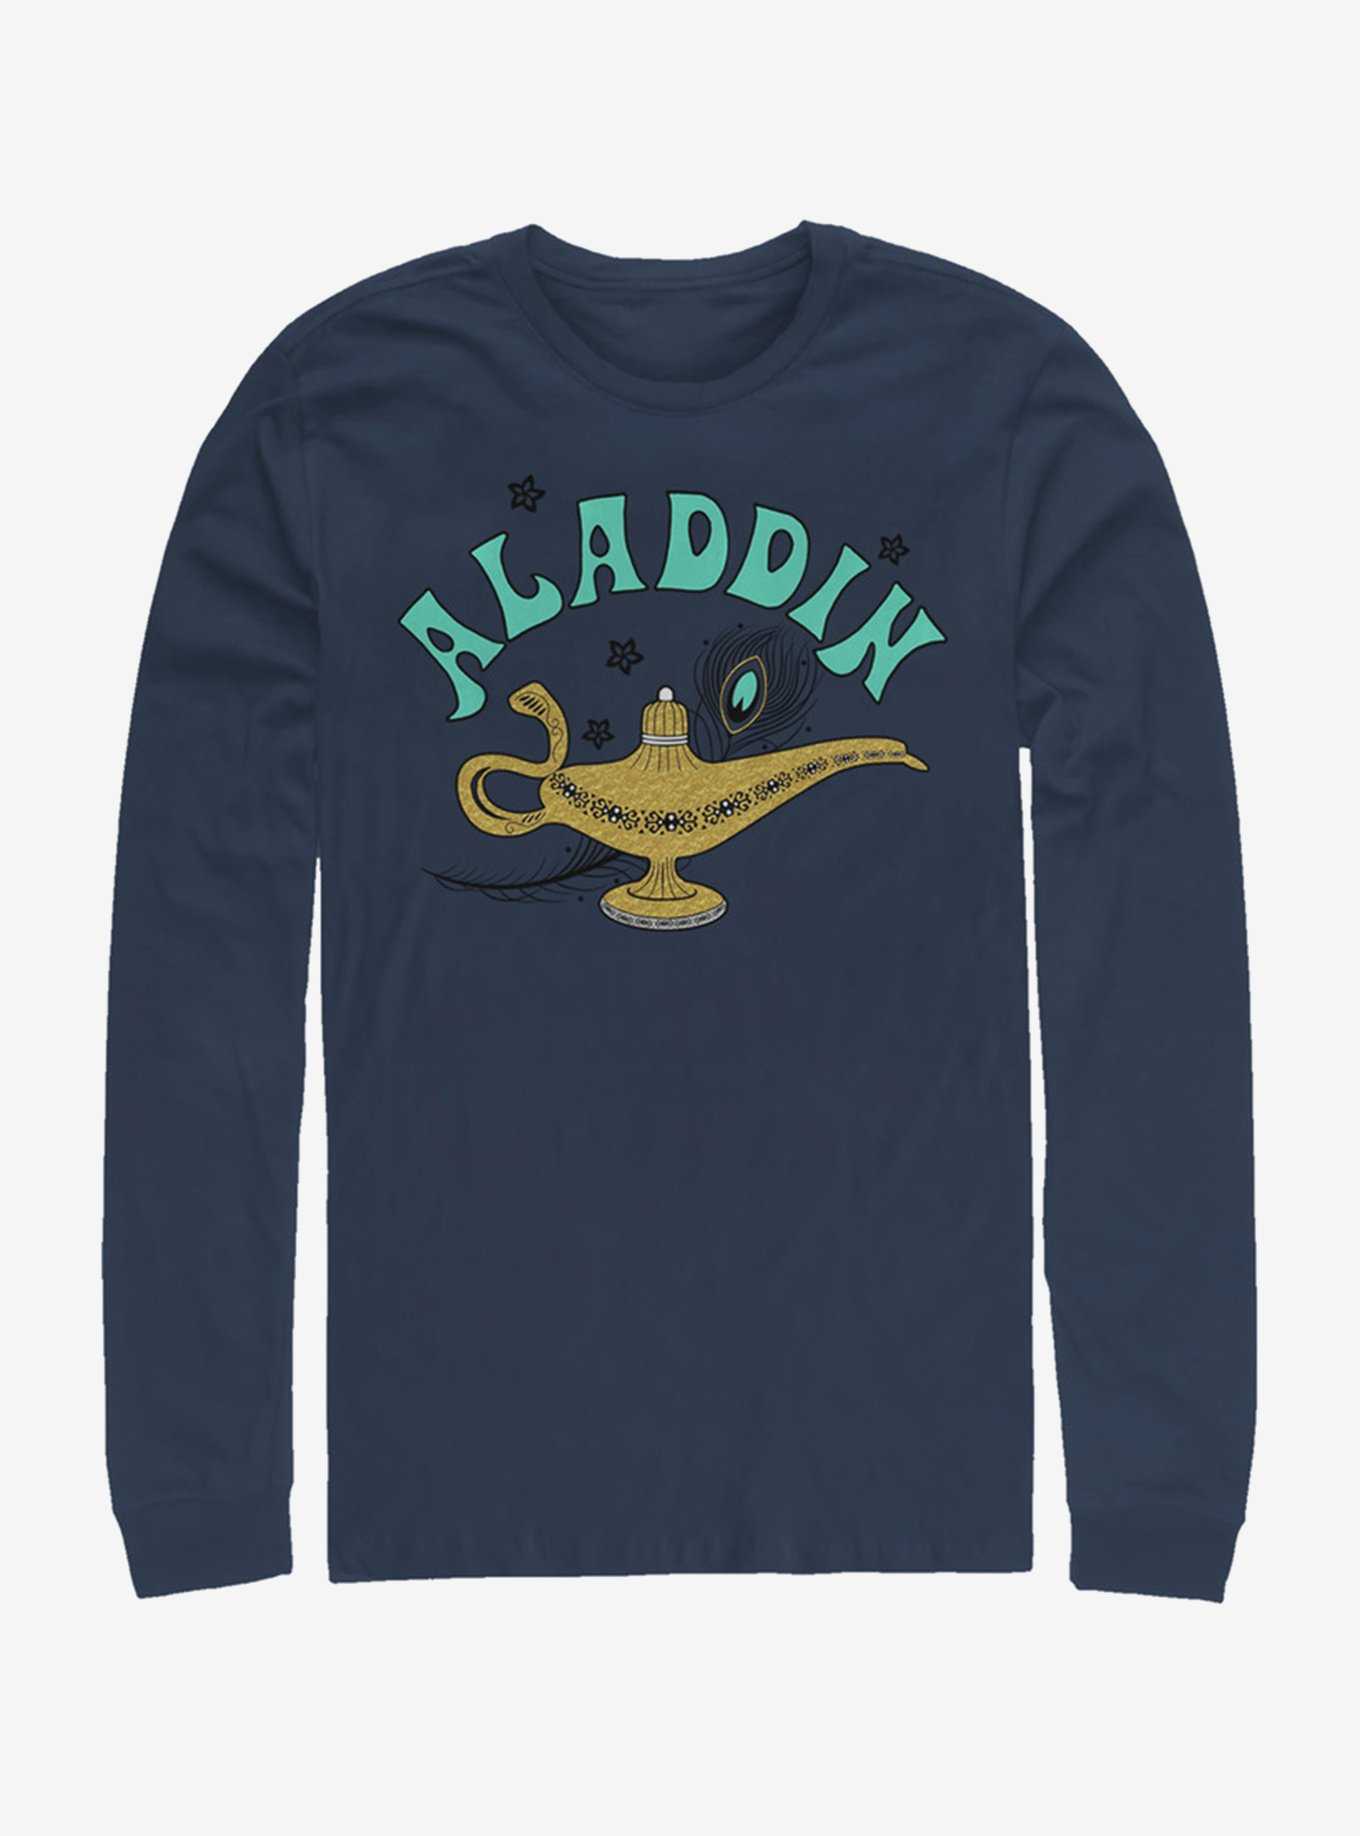 Disney Aladdin 2019 Aladdin Lamp Long Sleeve T-Shirt, , hi-res